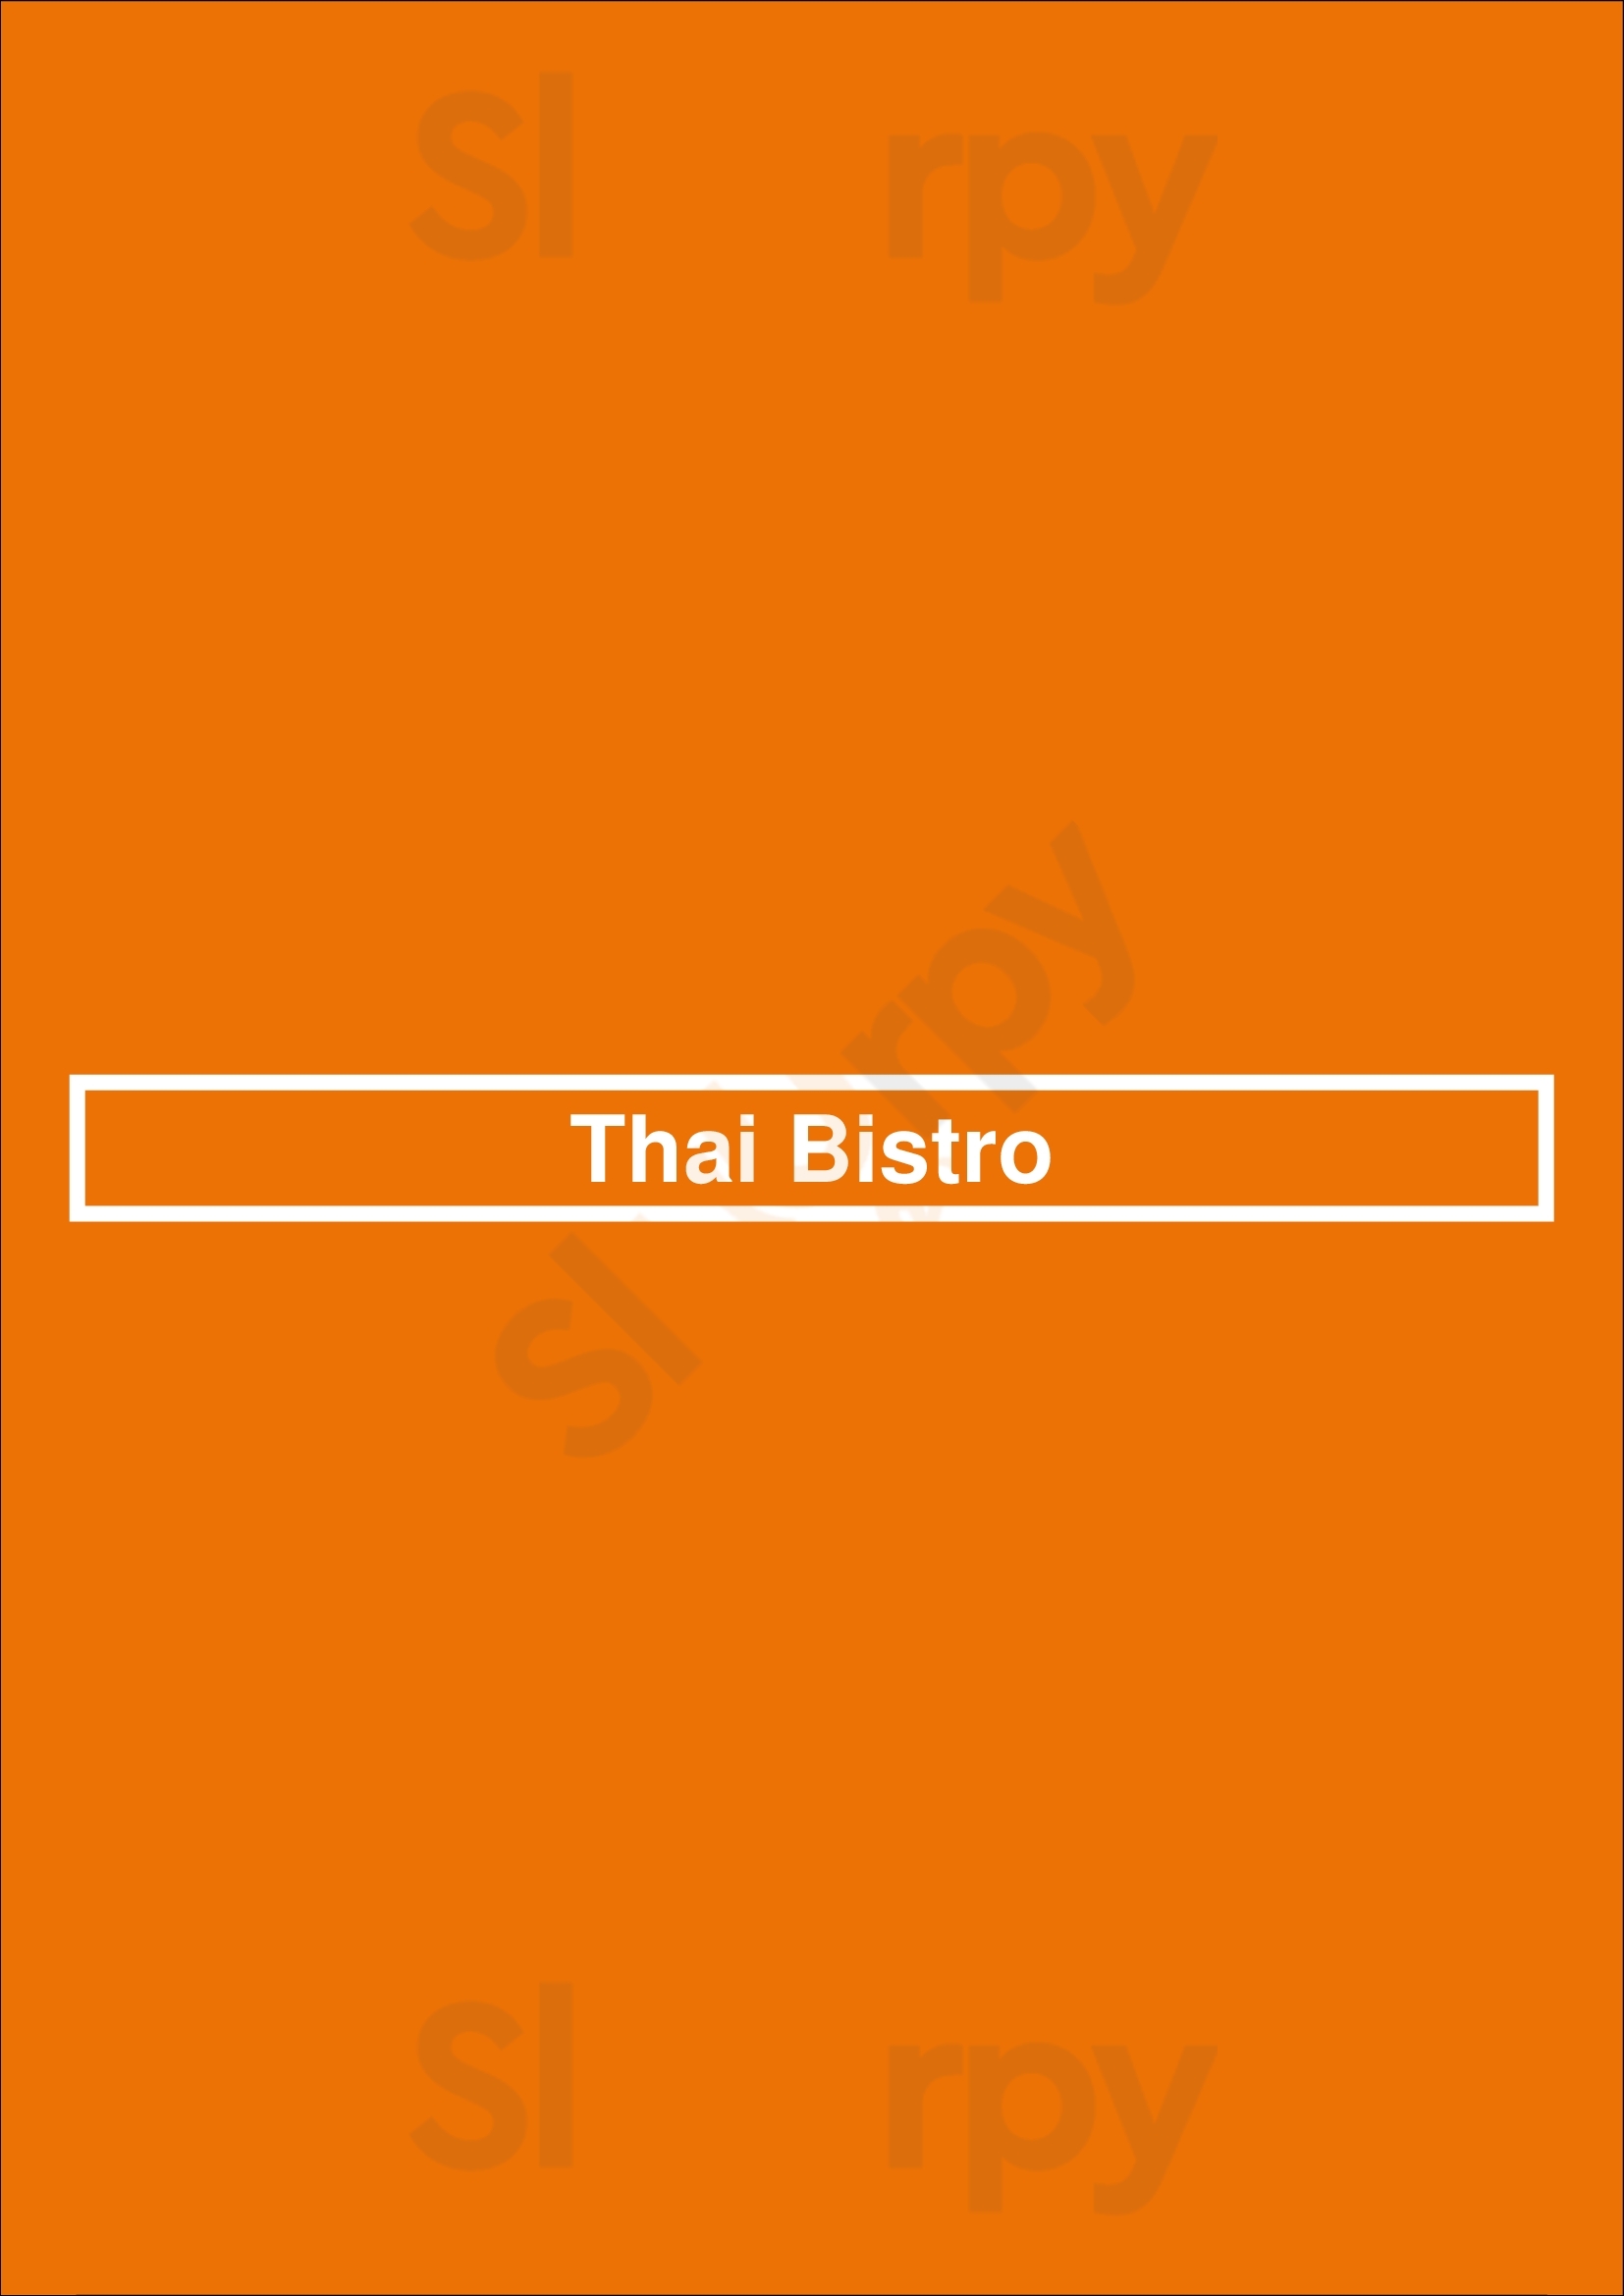 Thai Bistro Calgary Menu - 1